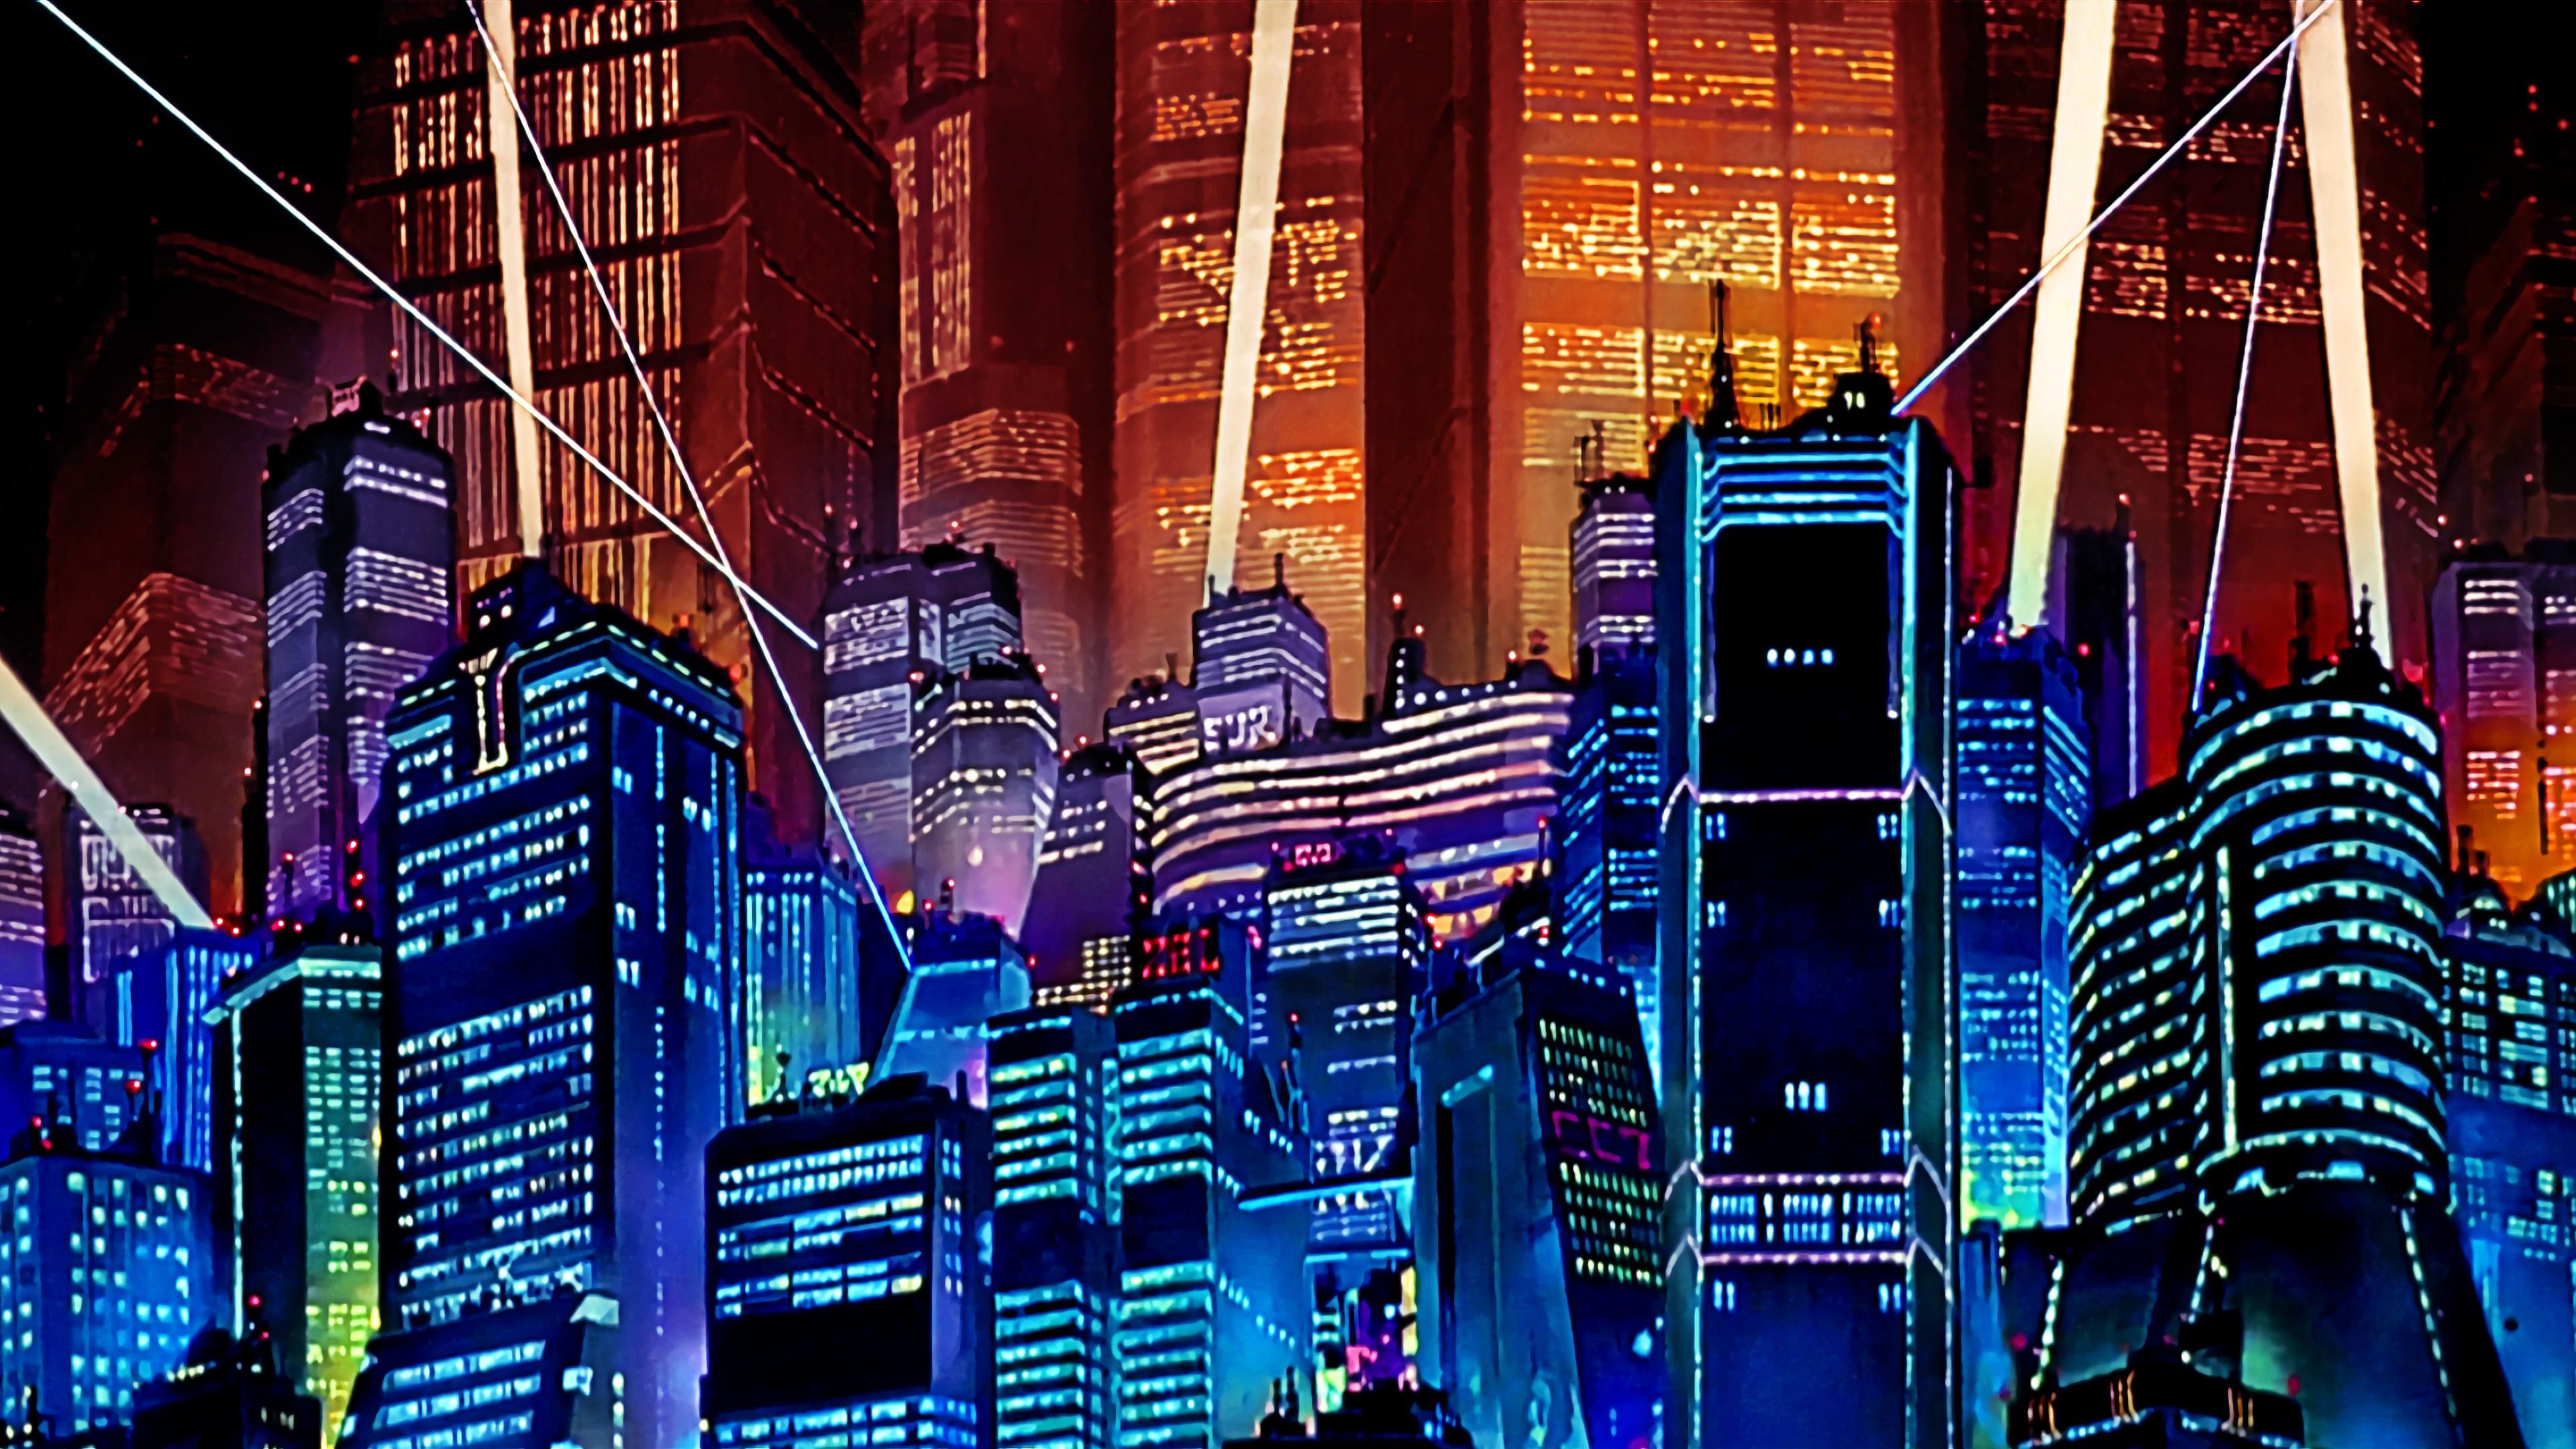 Akira Neo Tokyo Wallpaper Collection Enhanced and Radified). Neo tokyo, Cyberpunk city, Japan anime city